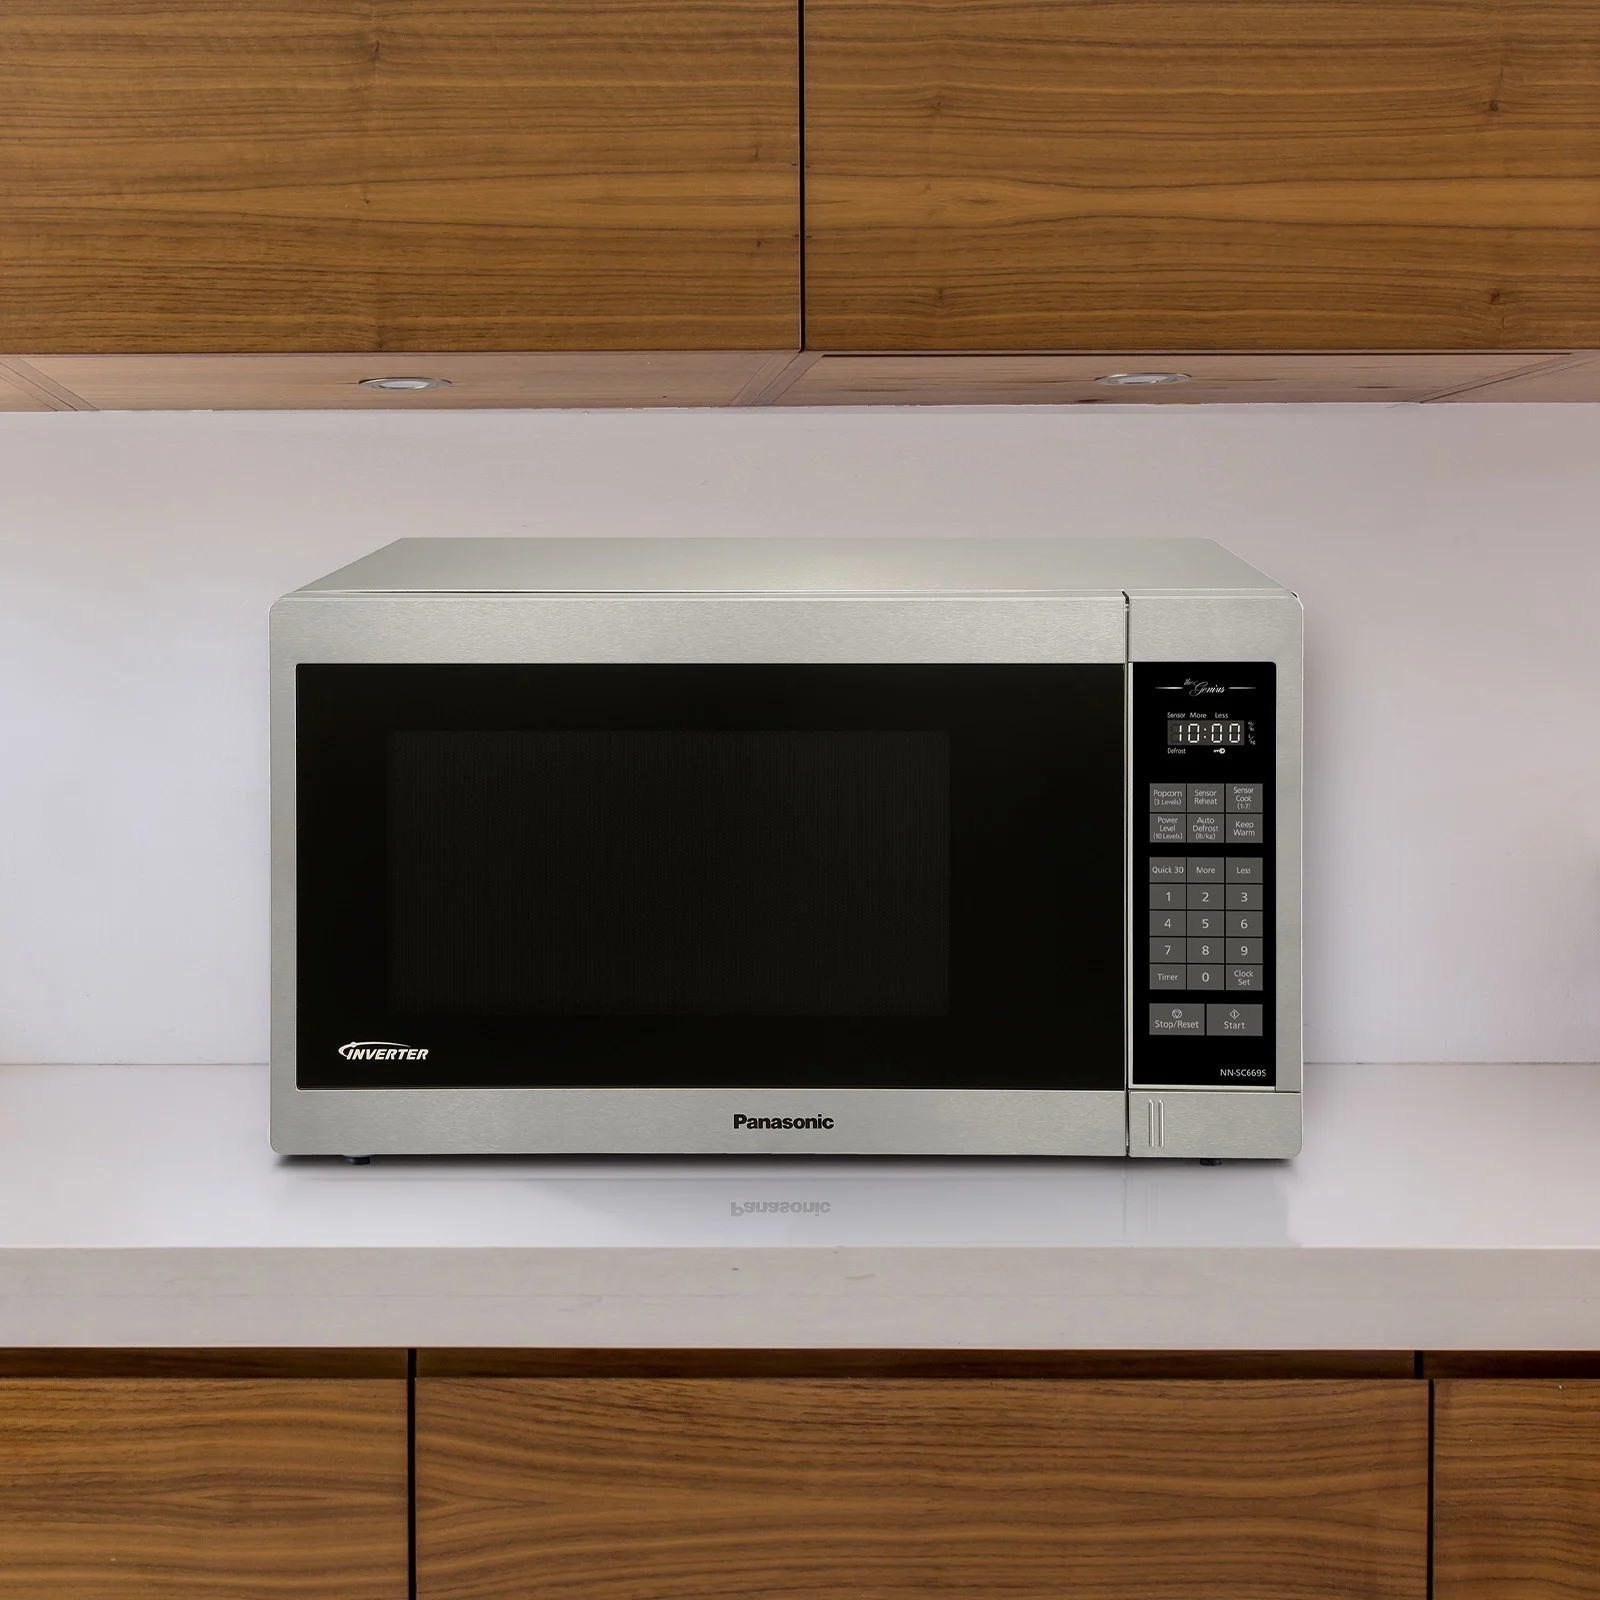 A countertop microwave